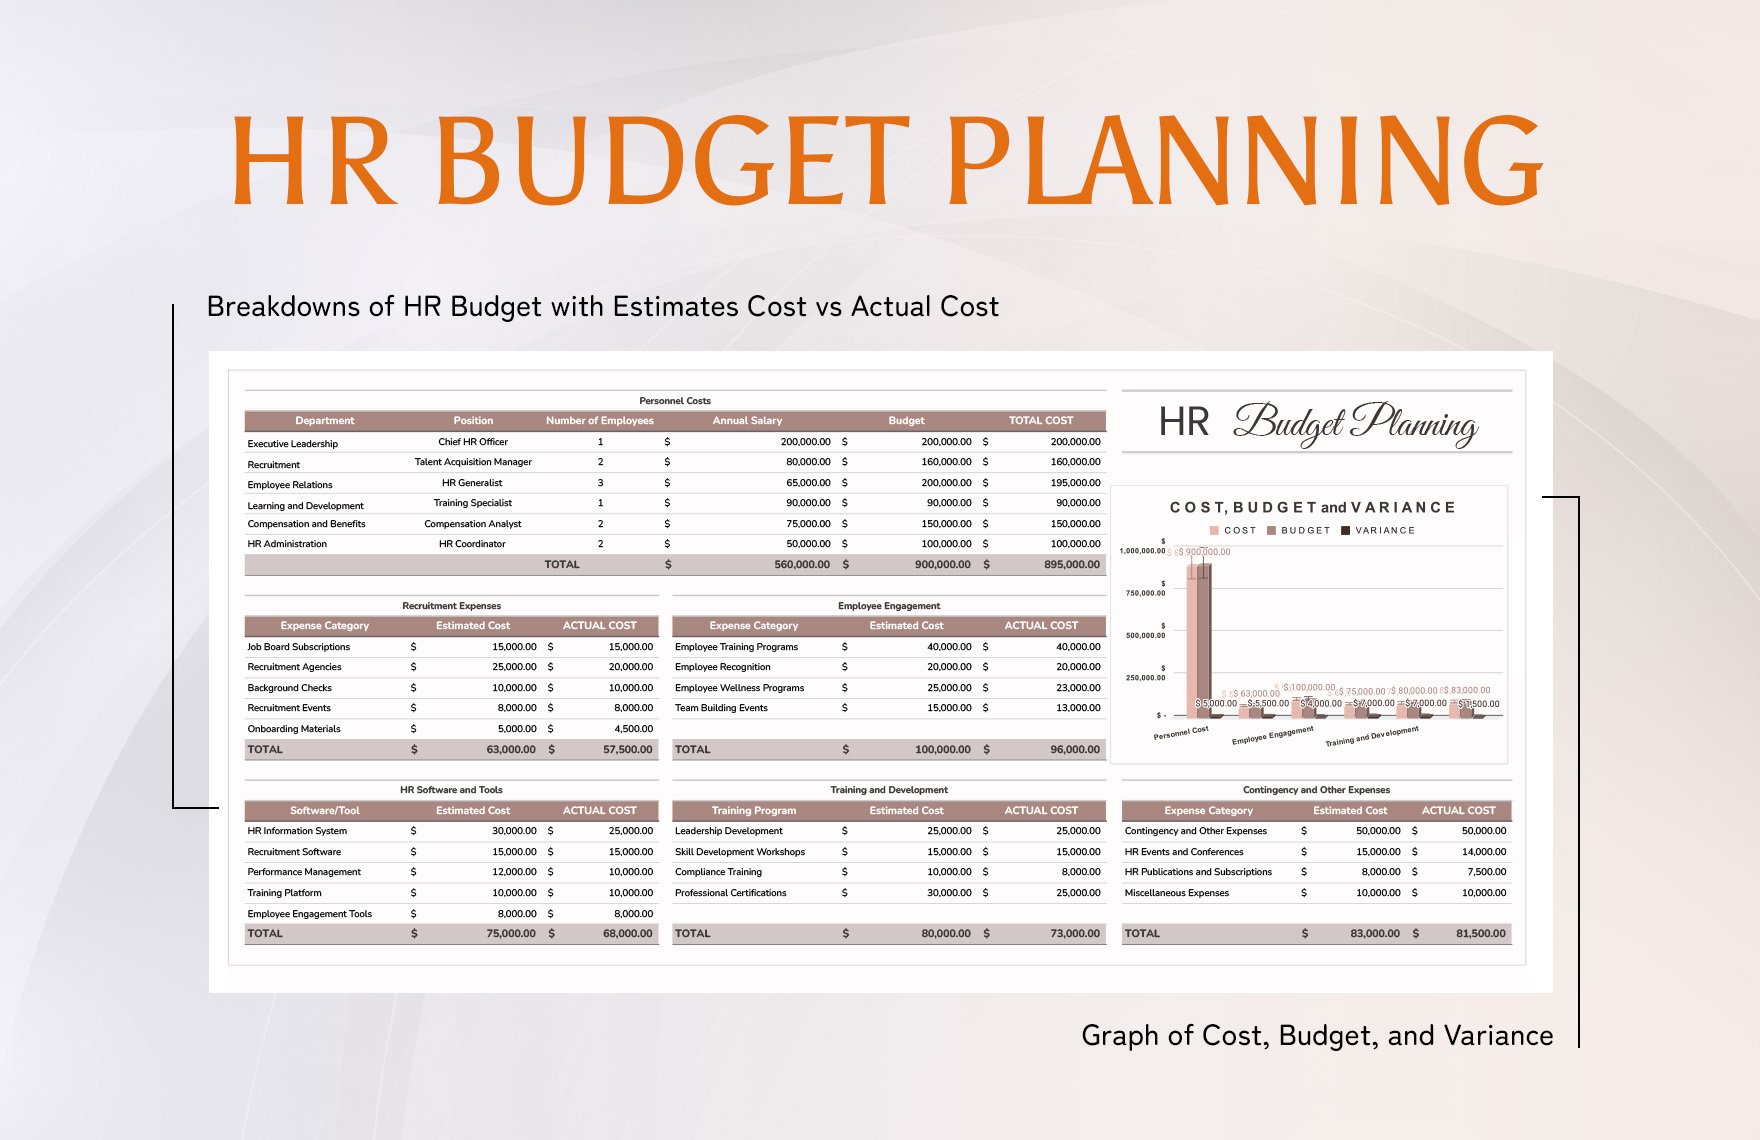 HR Budget Planning Template